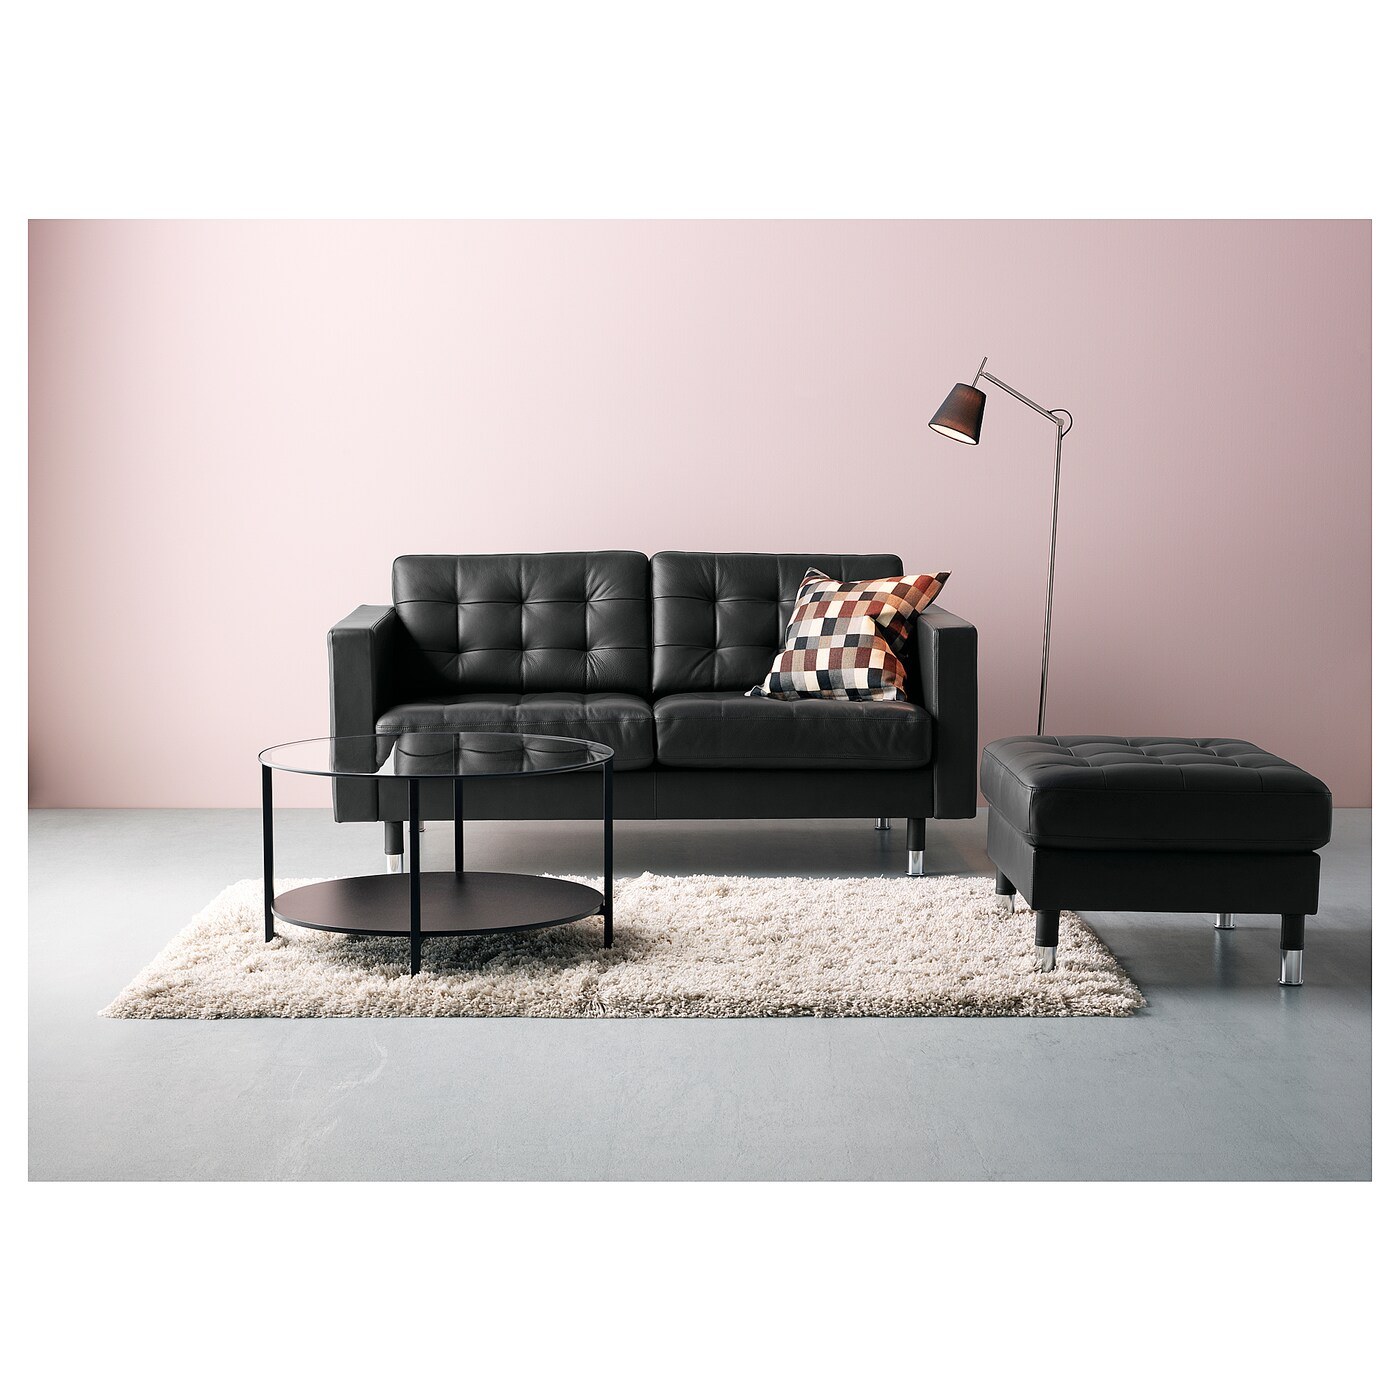 Идеи на тему «IKEA идеи» () | идеи икеа, интерьер, мебель ikea